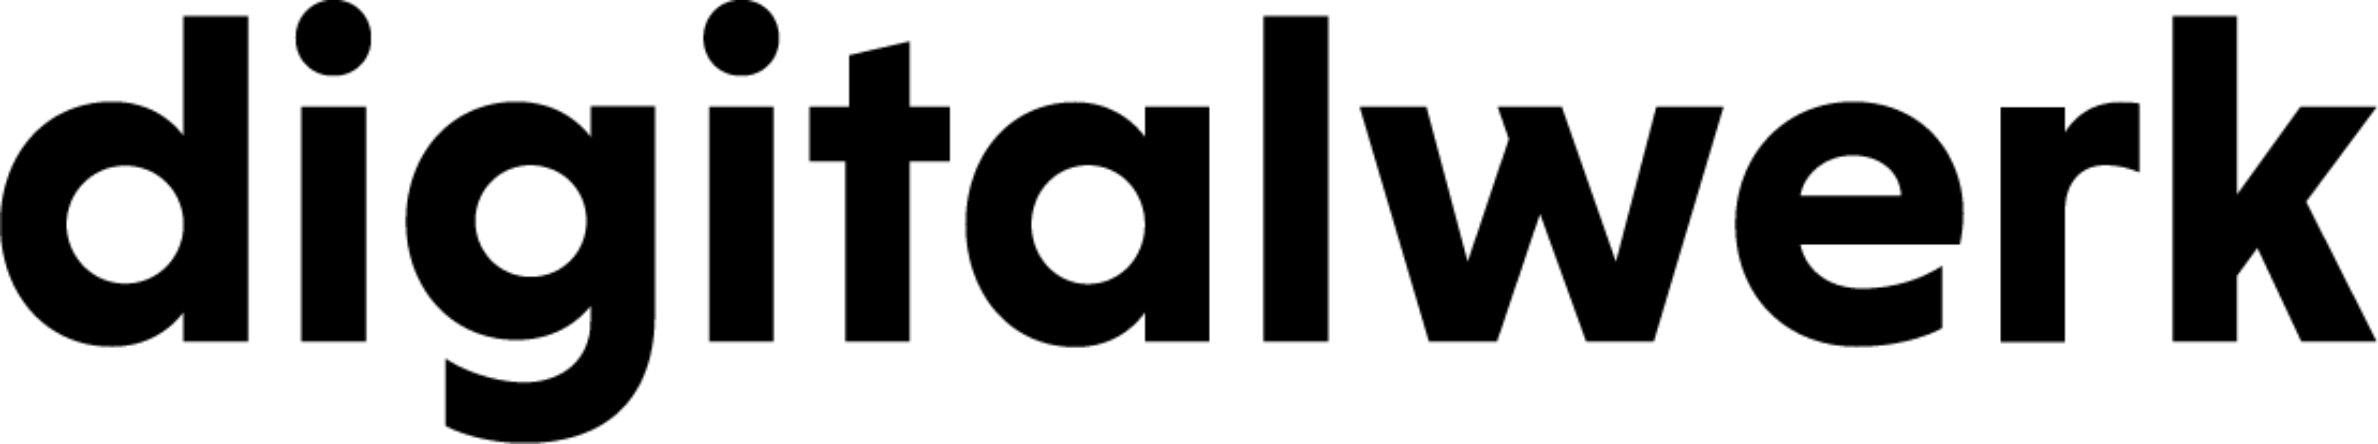 Digitalwerk Logo